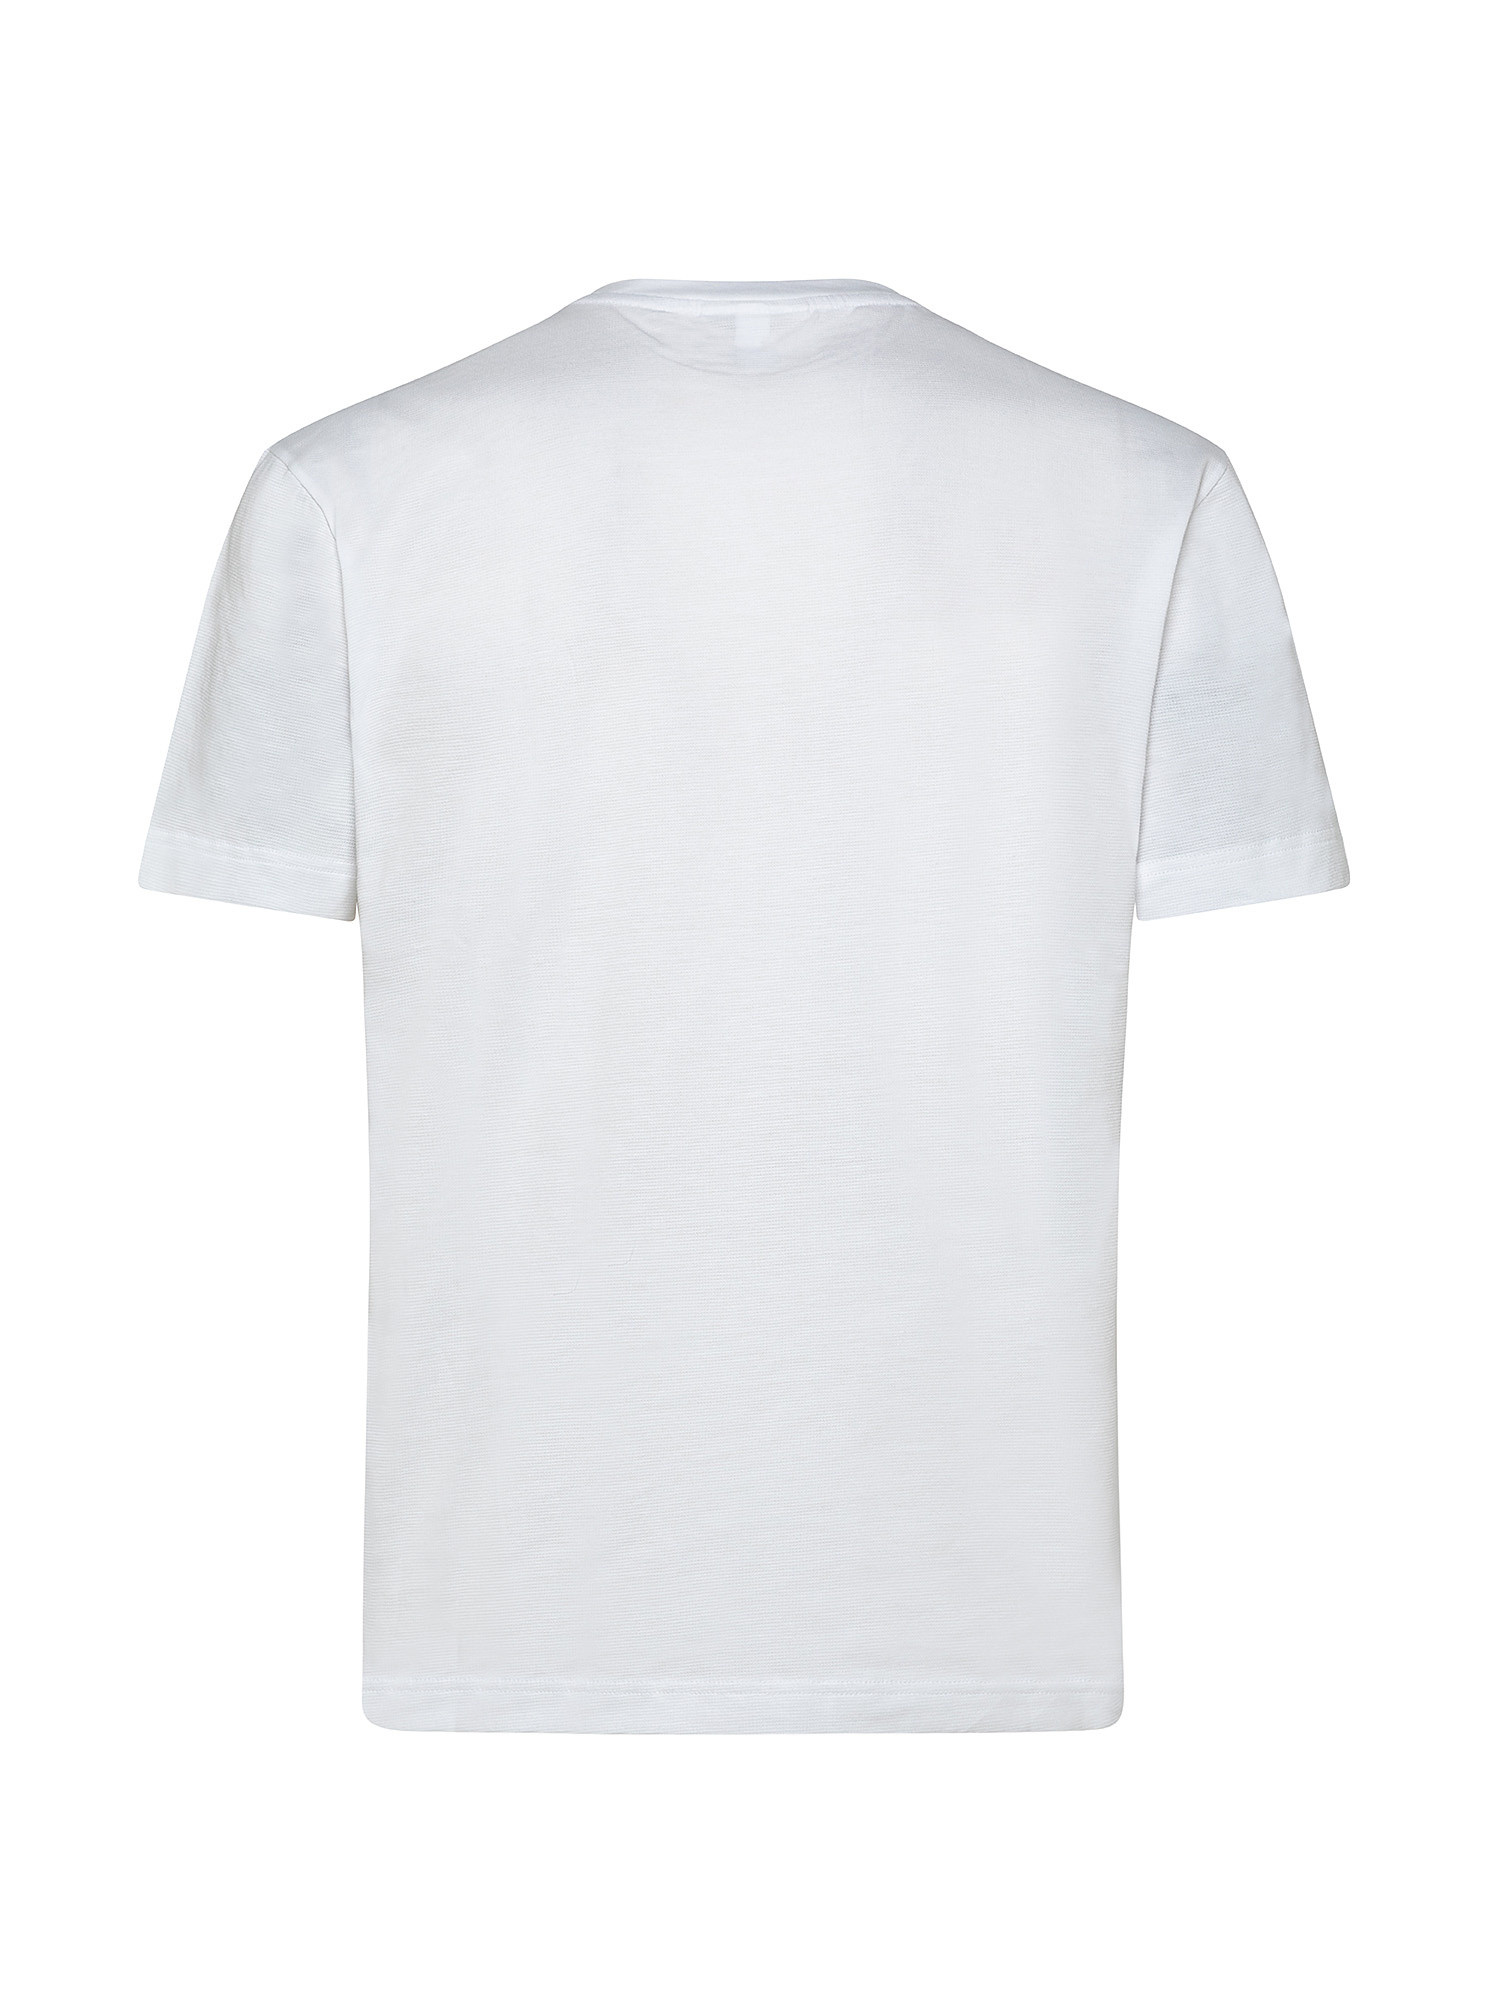 T-shirt, Bianco, large image number 1